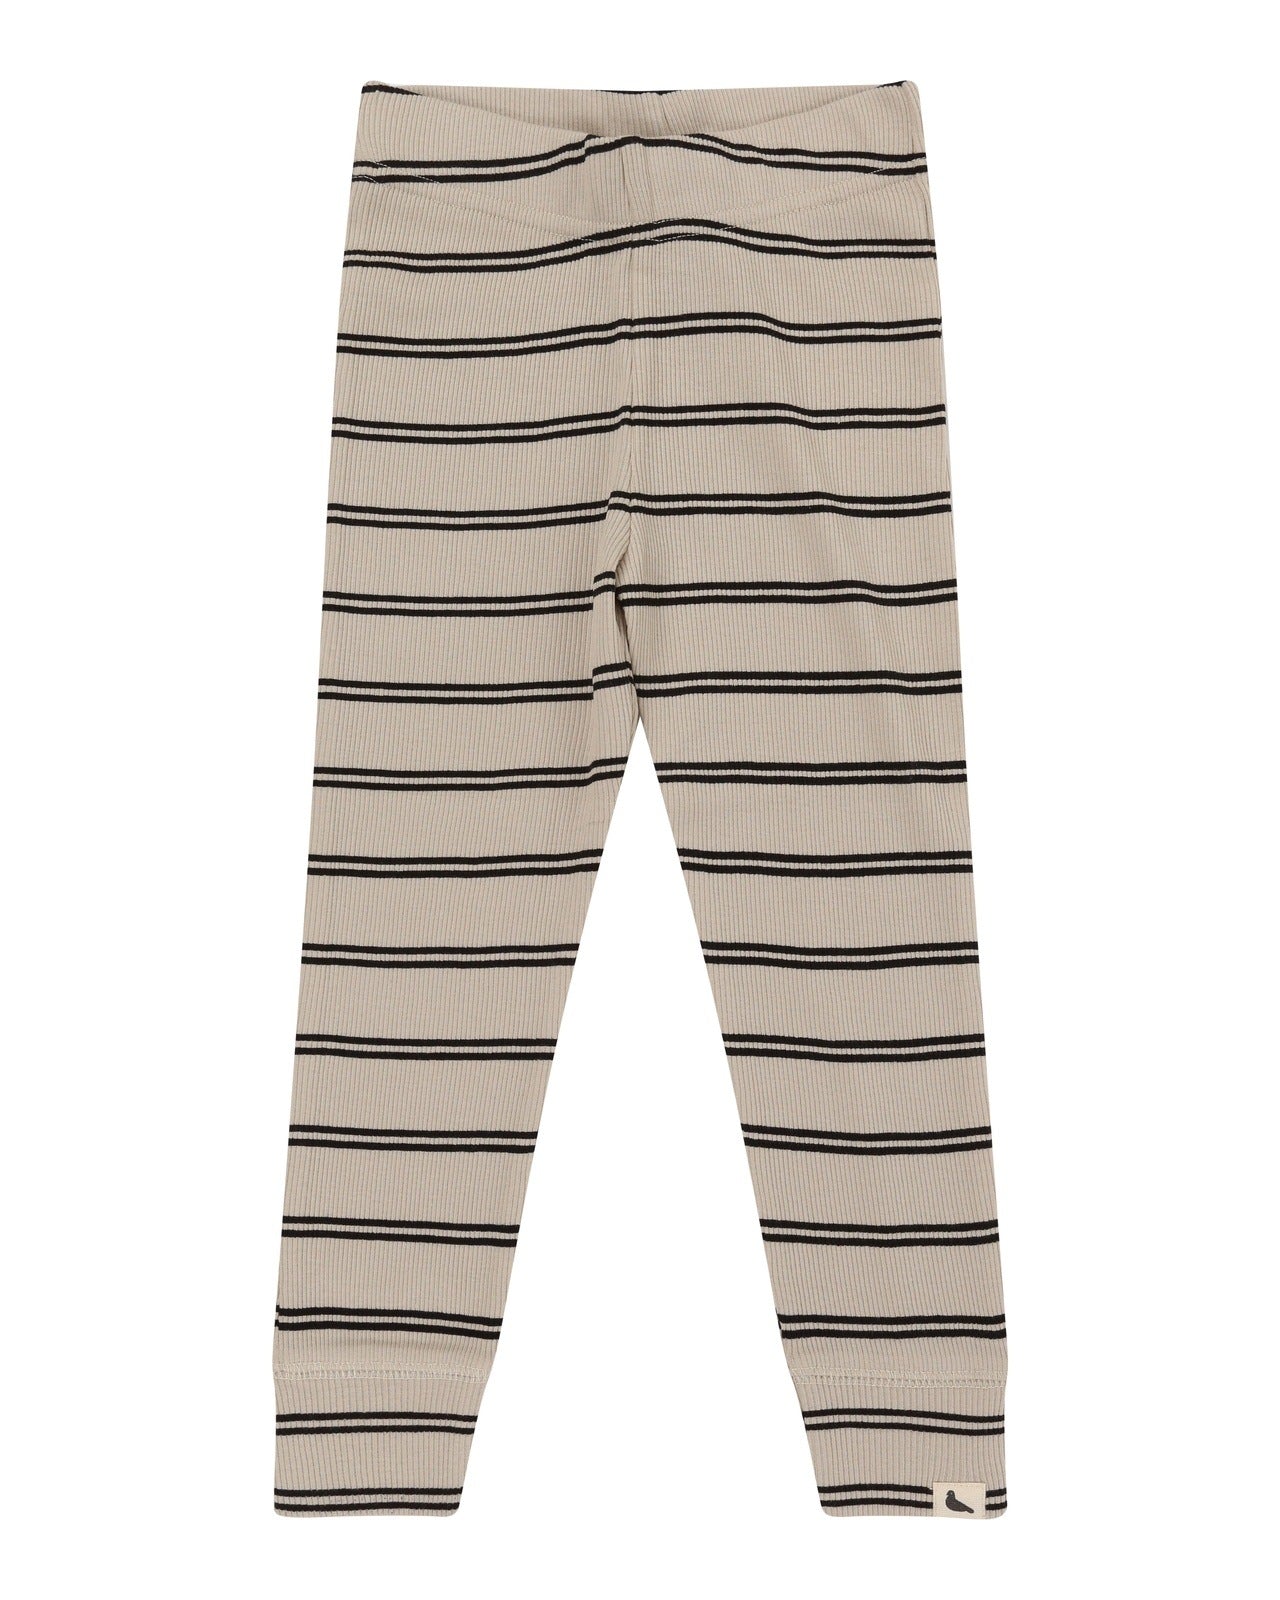 Turtledove stripe rib leggings are available at Alf & Co 